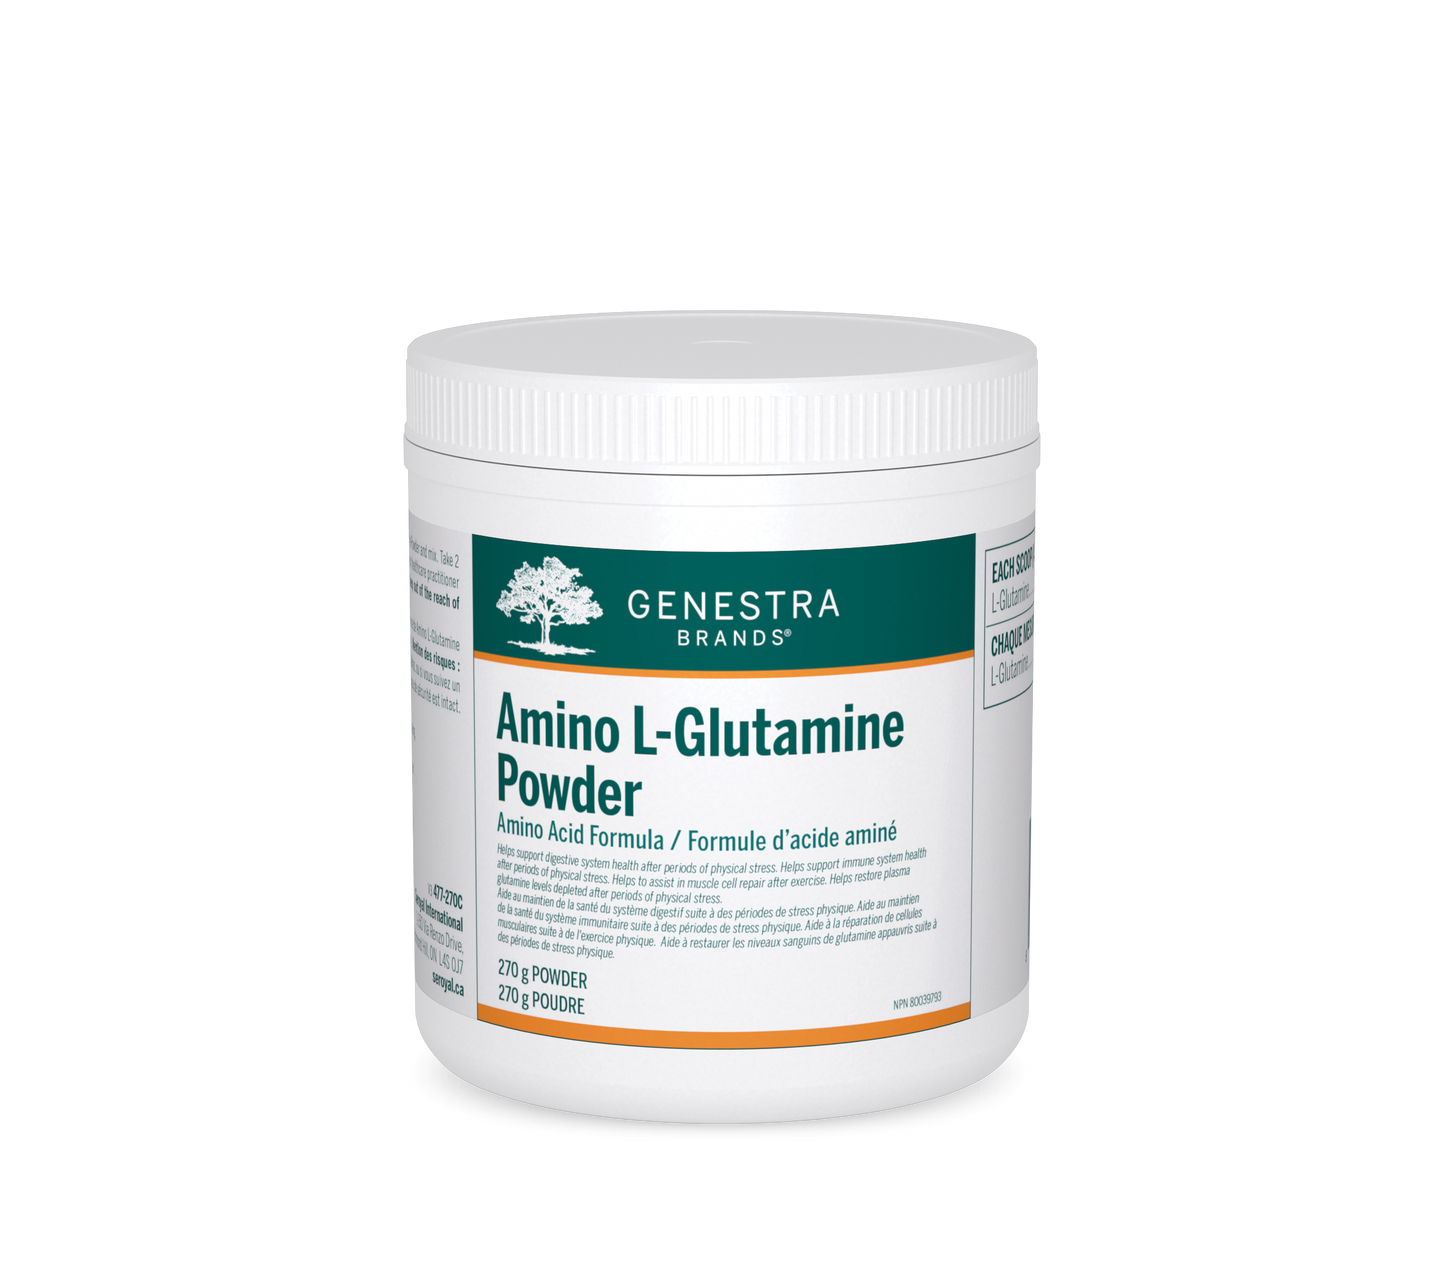 Amino L-Glutamine Powder